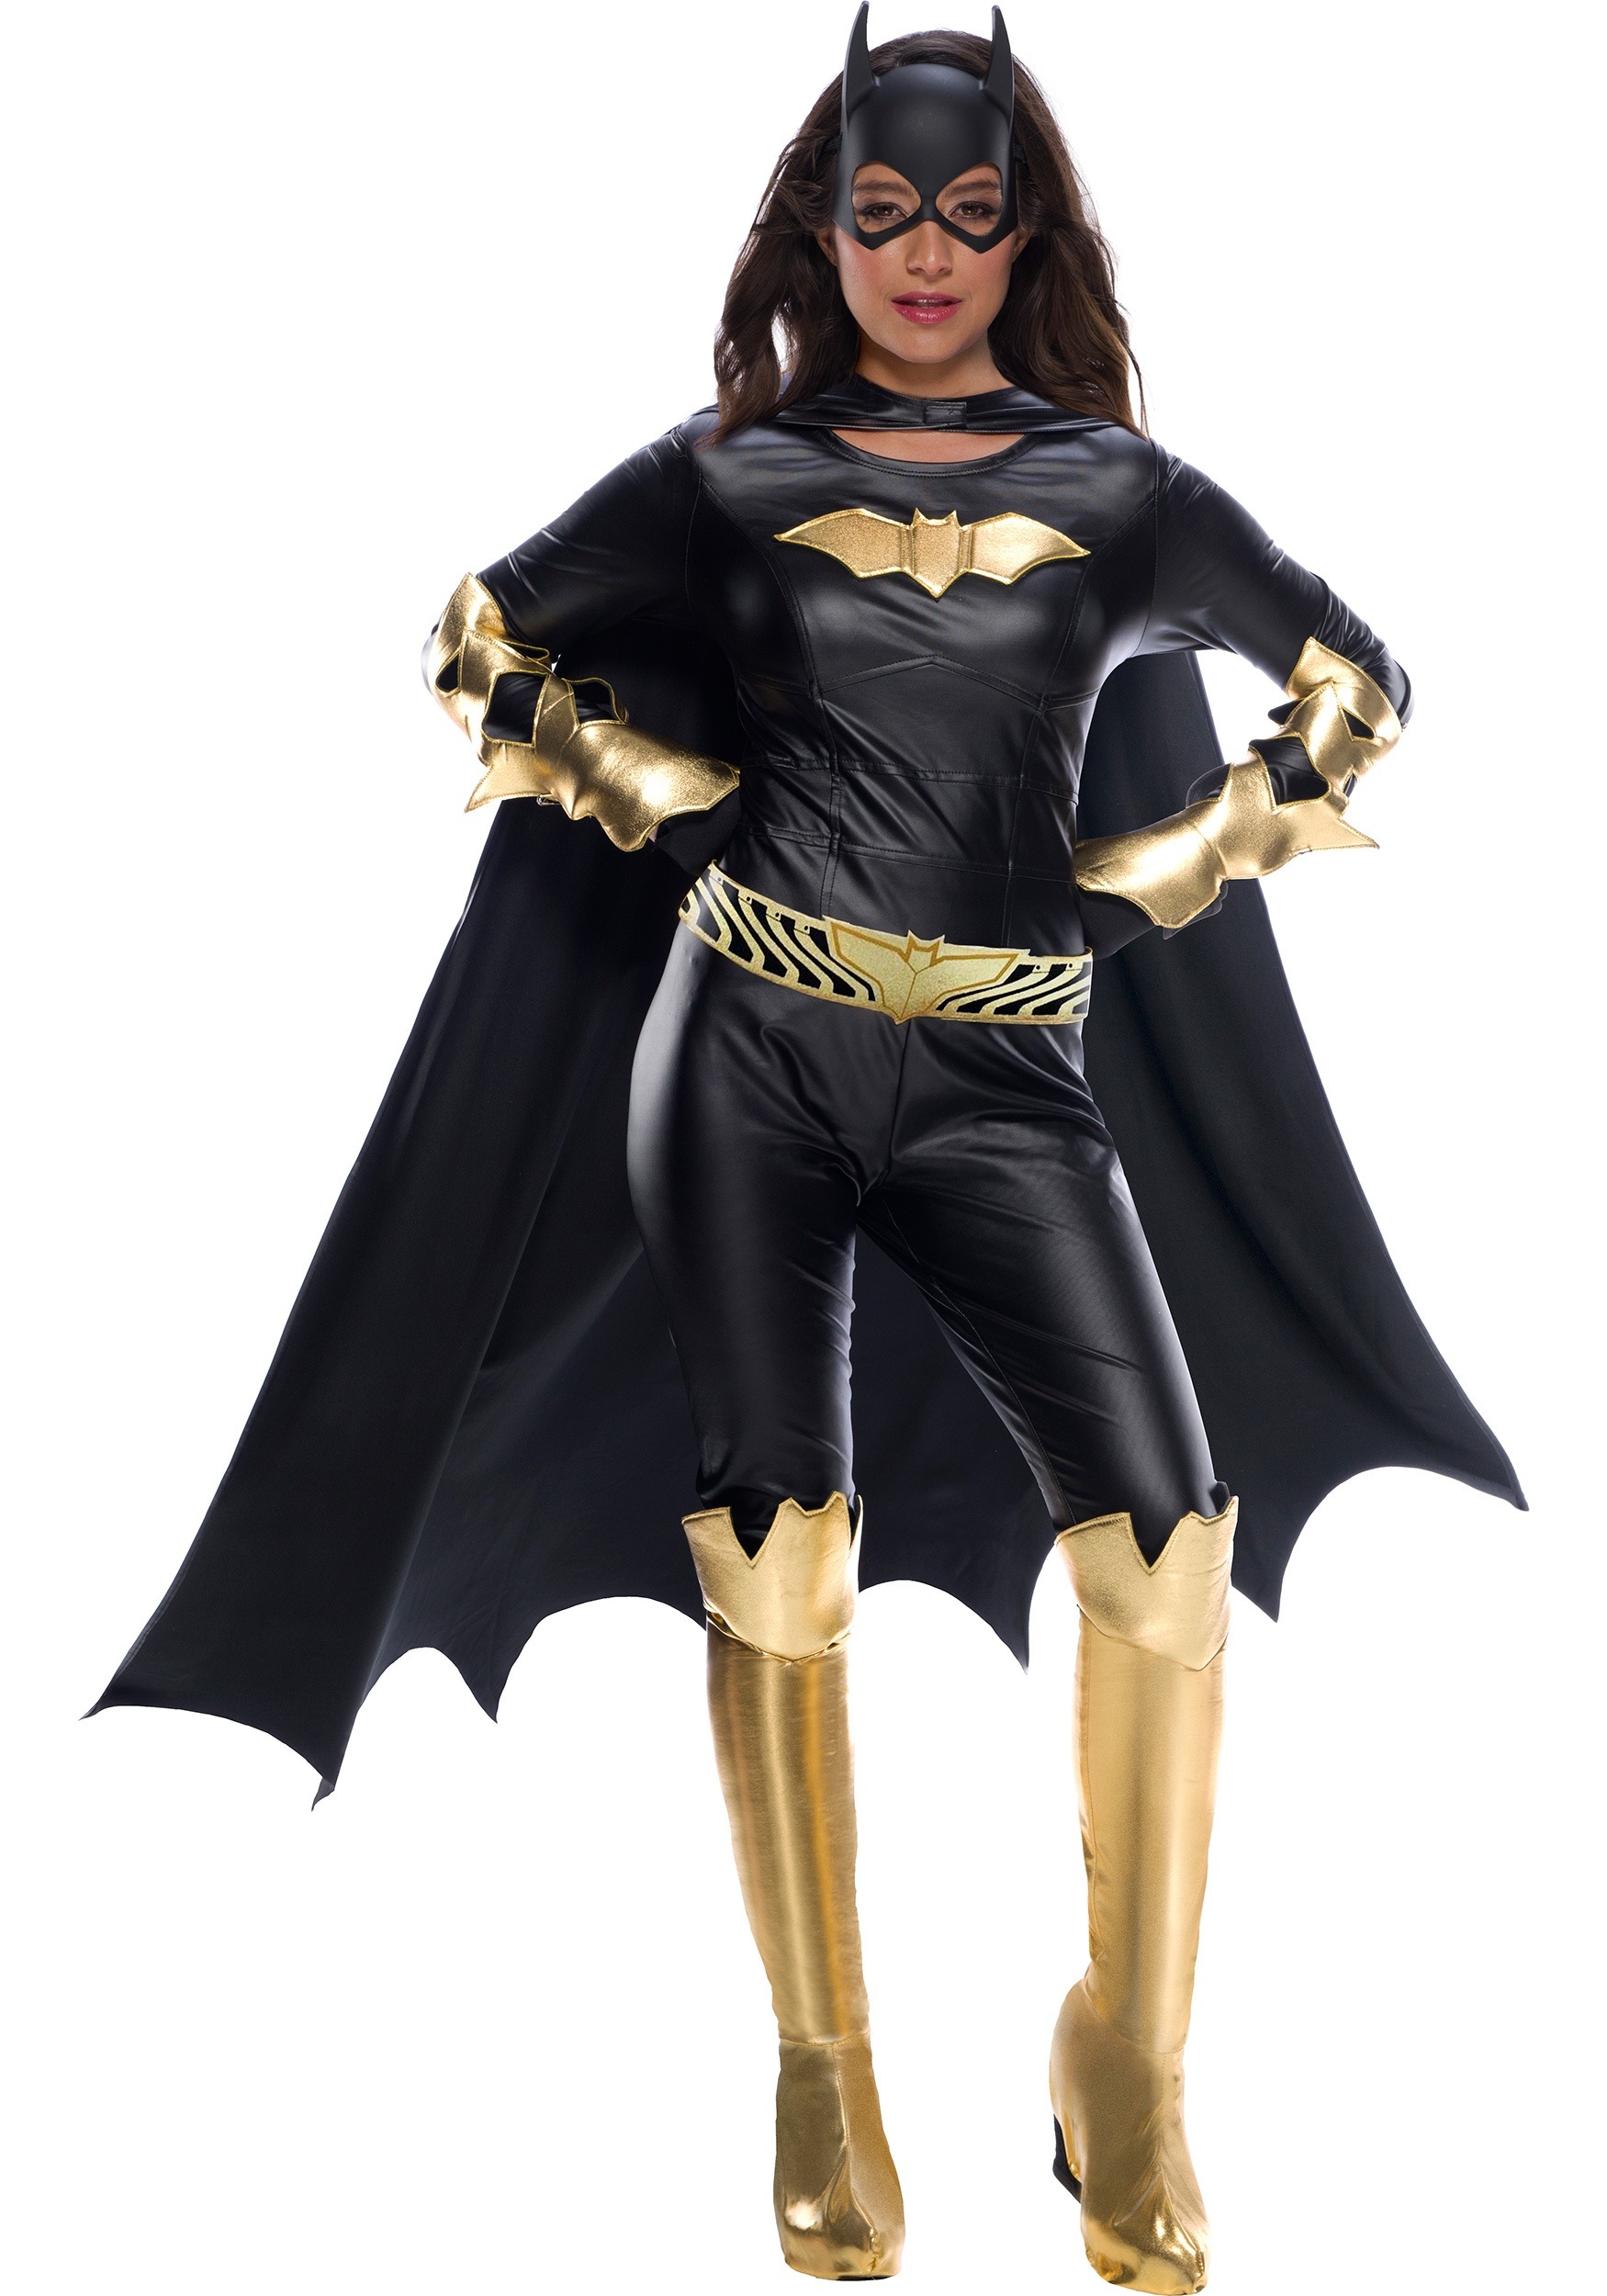 batman arkham city costume